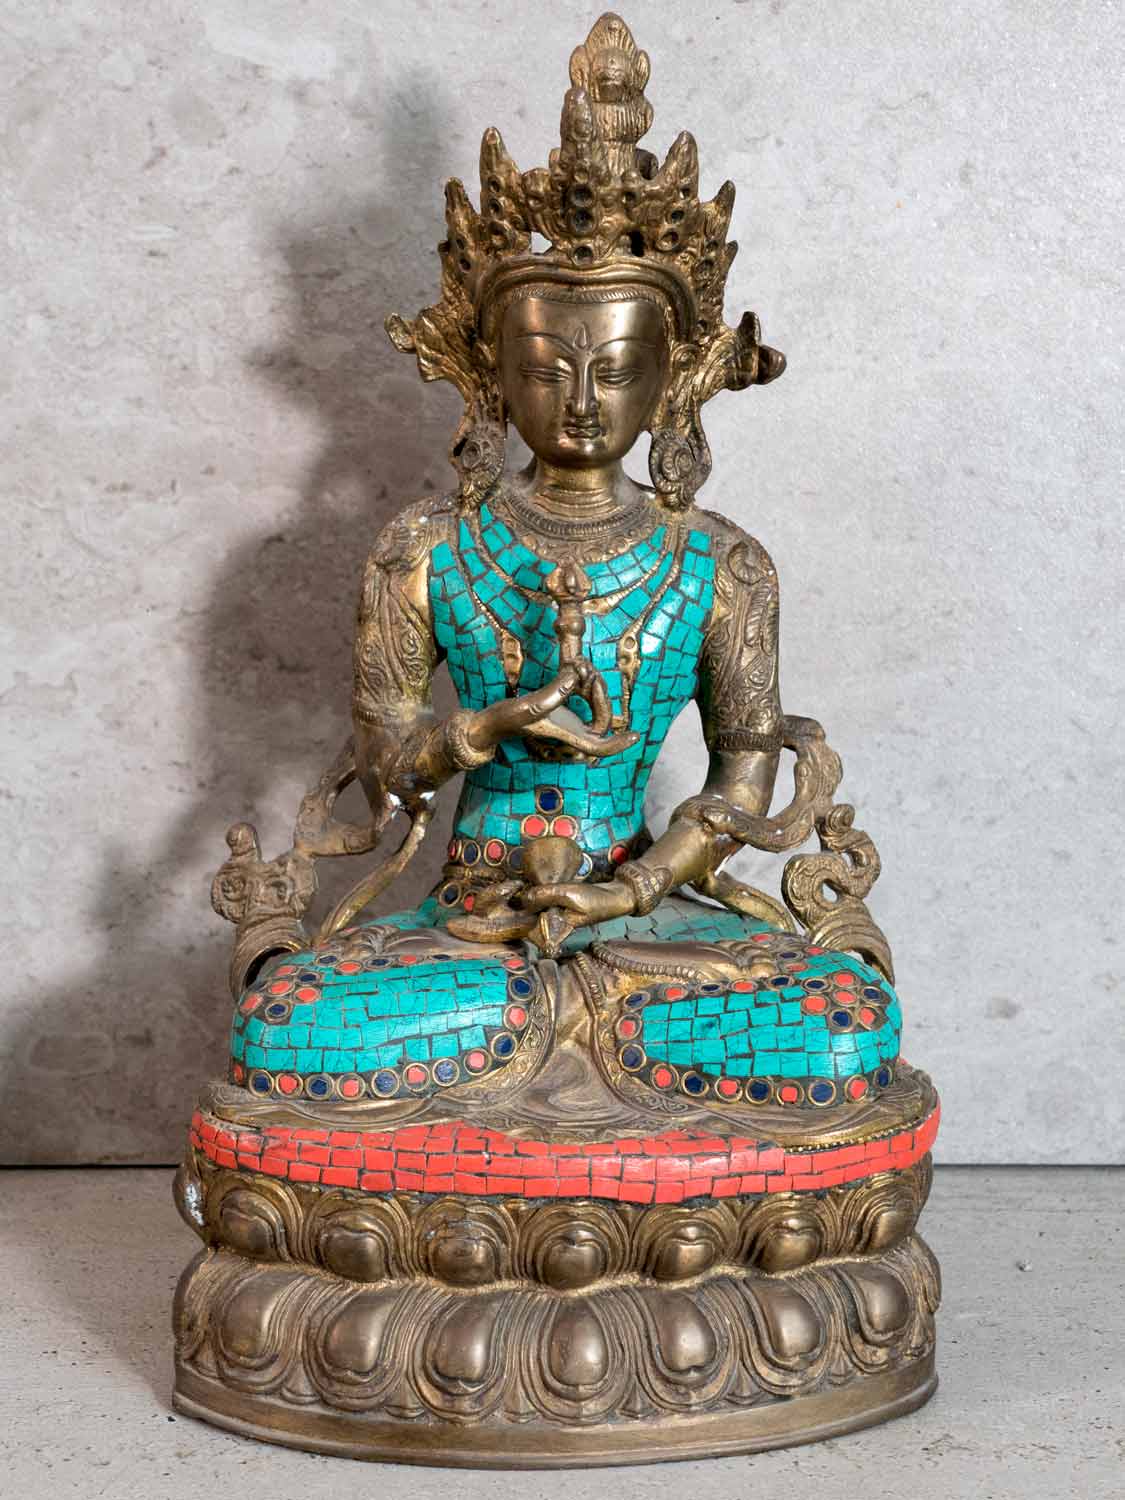 Vajrasattva Buddha Statue with Turquoise Inlay